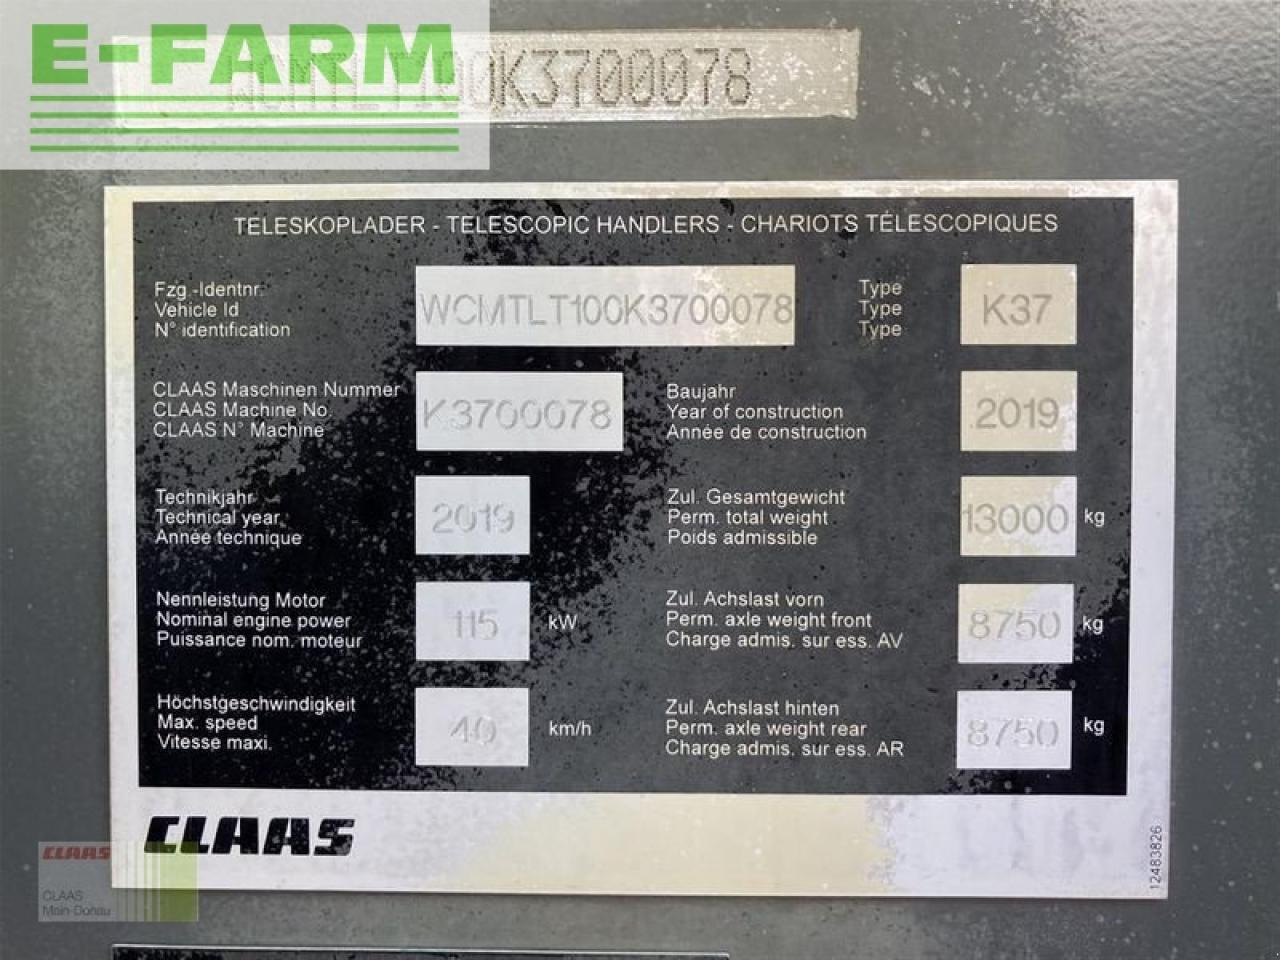 Farm tractor CLAAS scorpion 756 varipower